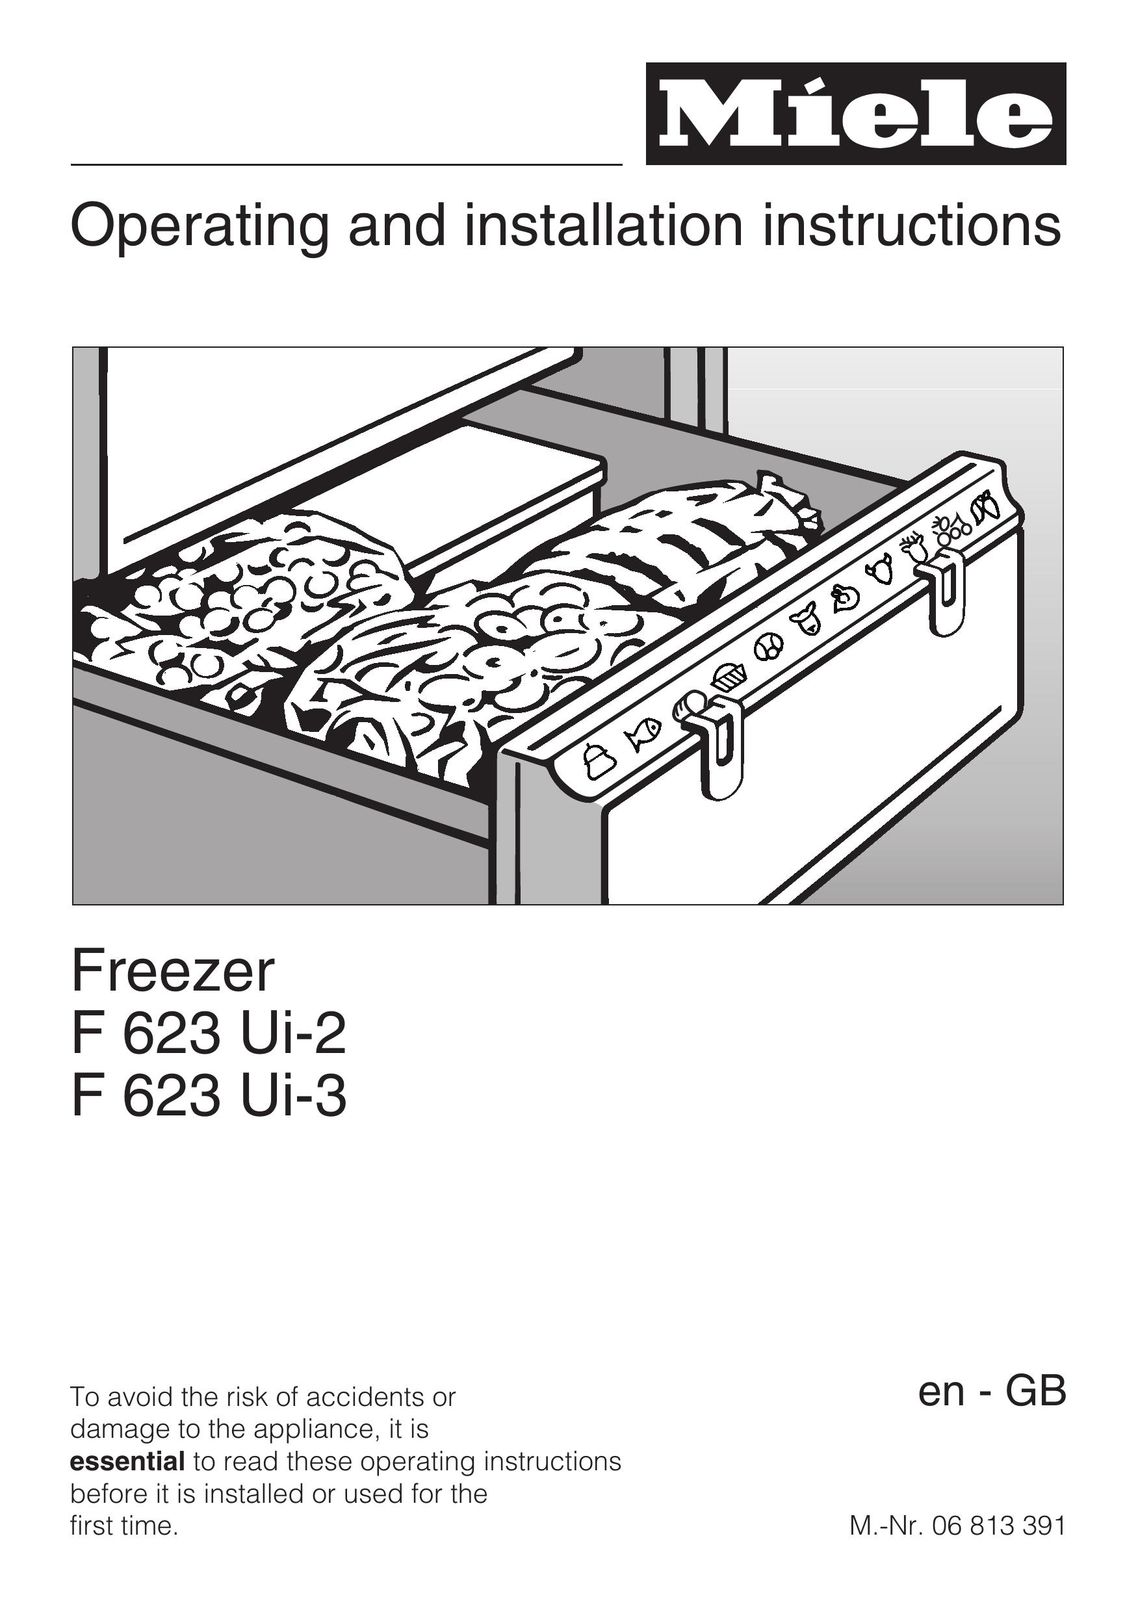 Miele F623 Ui-2 Freezer User Manual